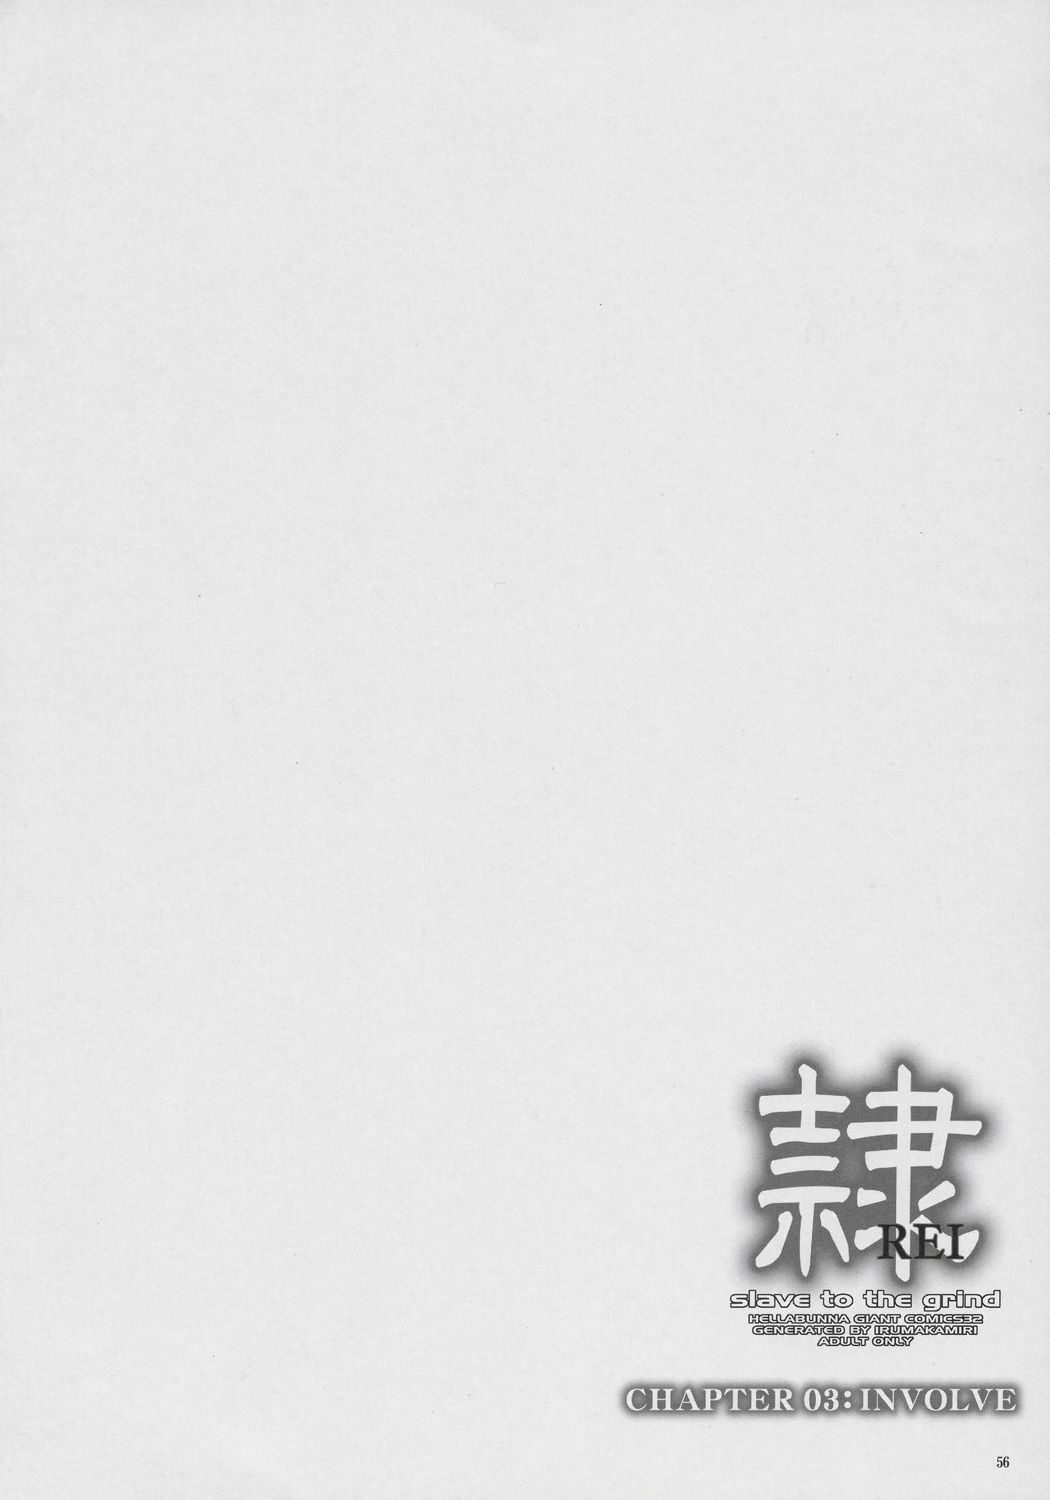 (C71) [Hellabunna (Iruma Kamiri)] Rei Chapter 03: Involve Slave to the Grind   (Dead or Alive) (C71) [へらぶな (いるまかみり)] 隷 CHAPTER 03:INVOLVE slave to the grind (デッド・オア・アライヴ)